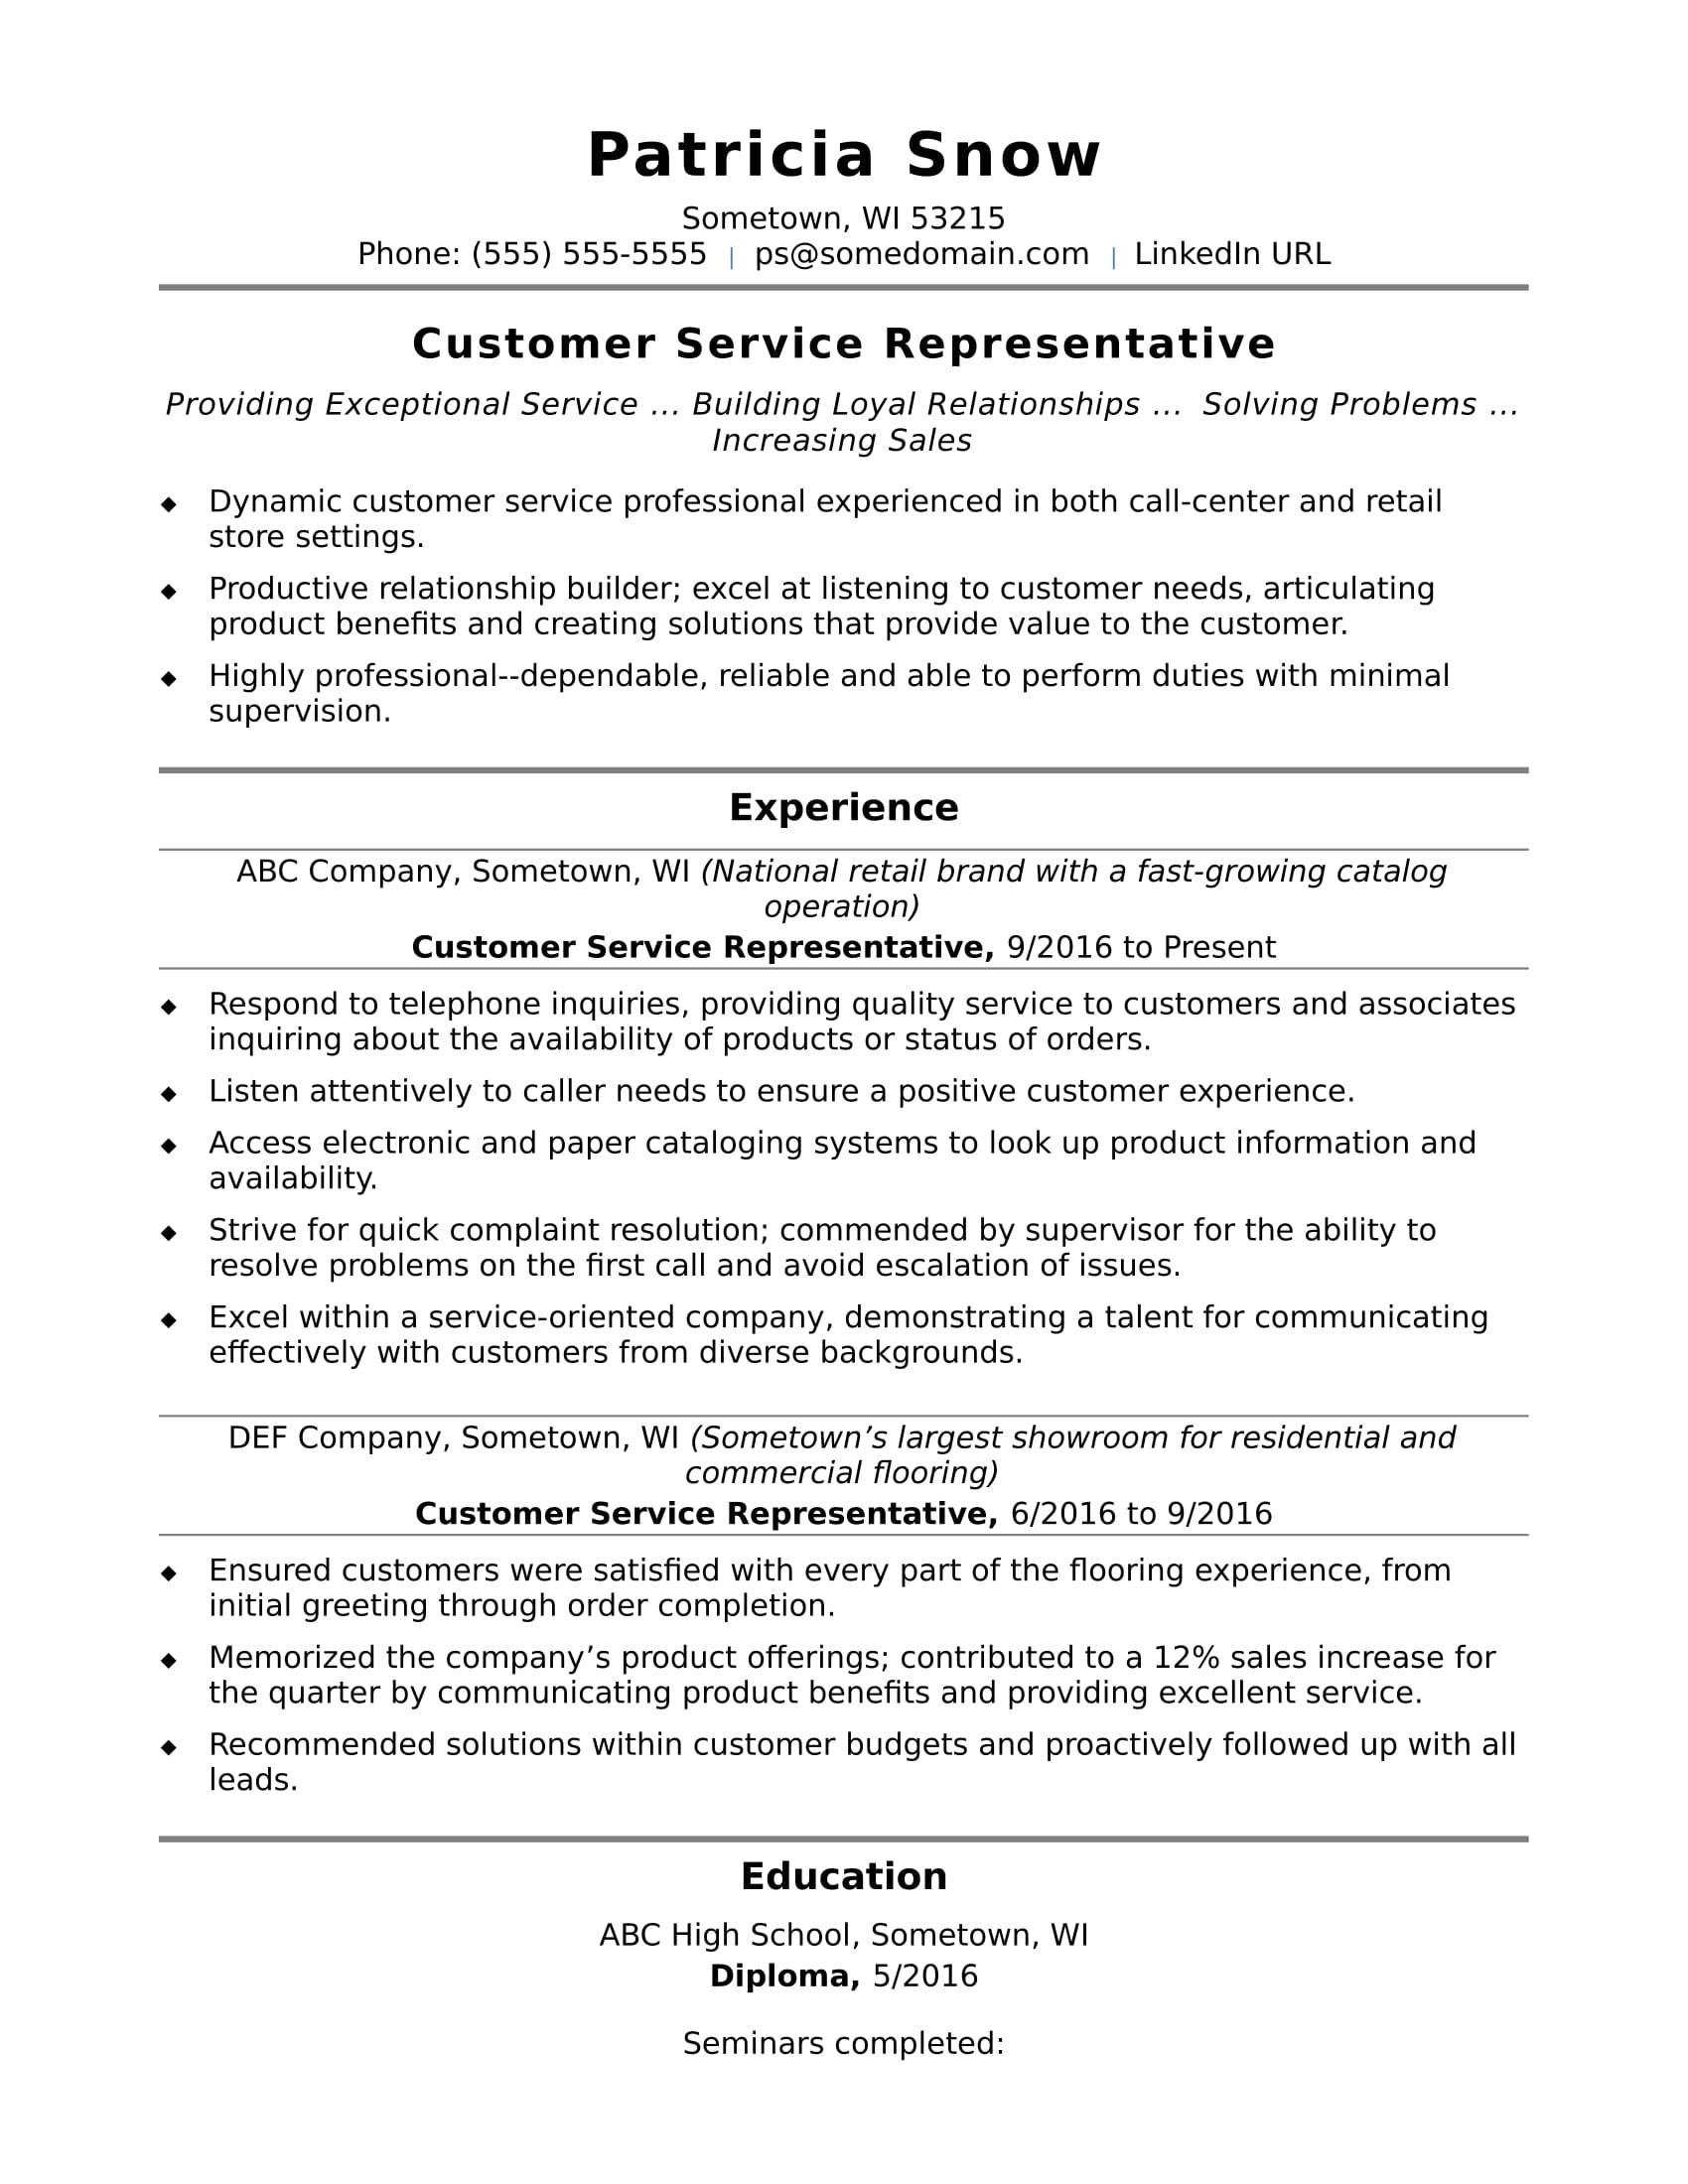 Customer Service Skills On Resume Sample Customer Service Representative Resume Sample Monster.com